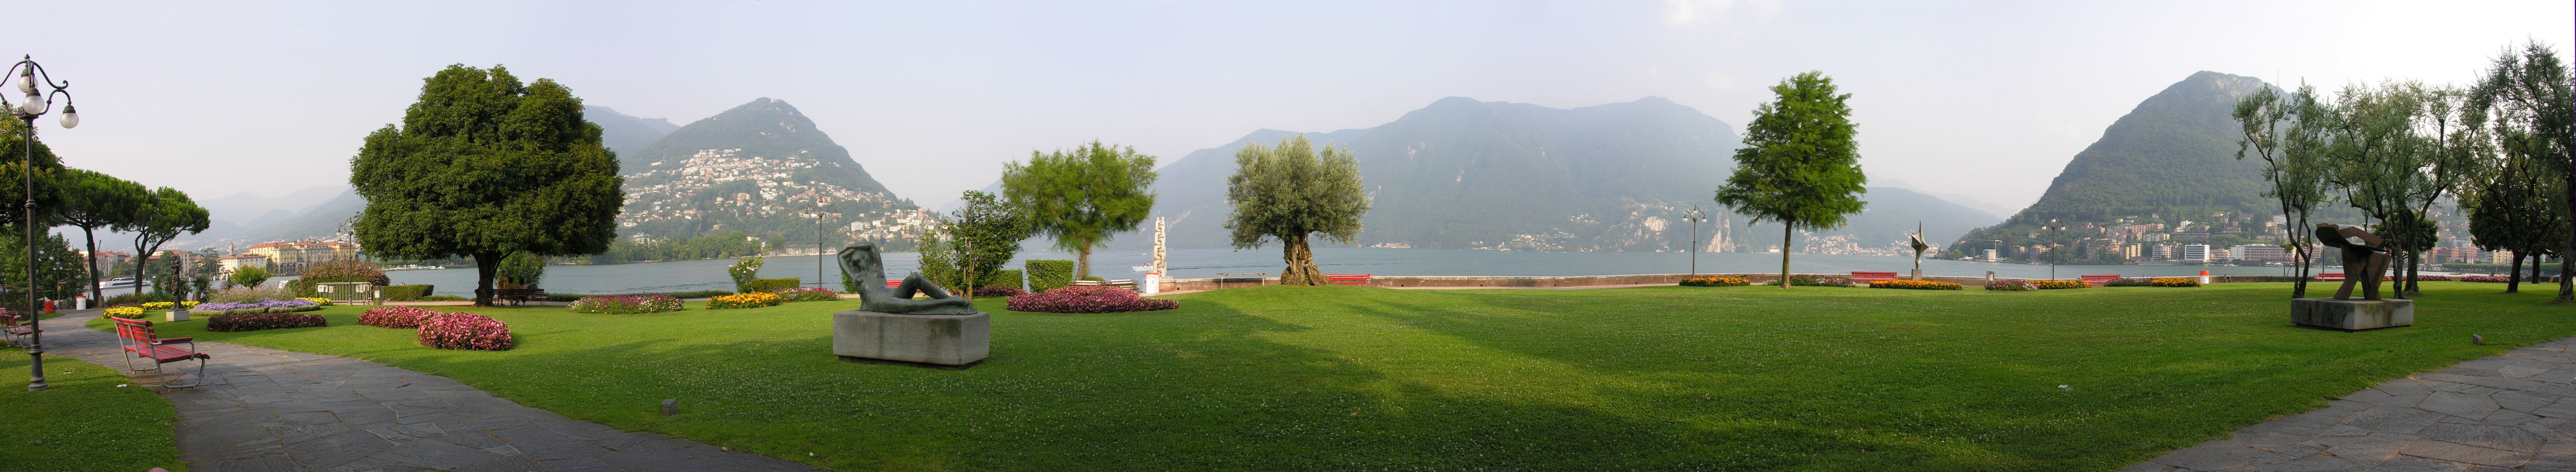 Lugano lake - Switzerland